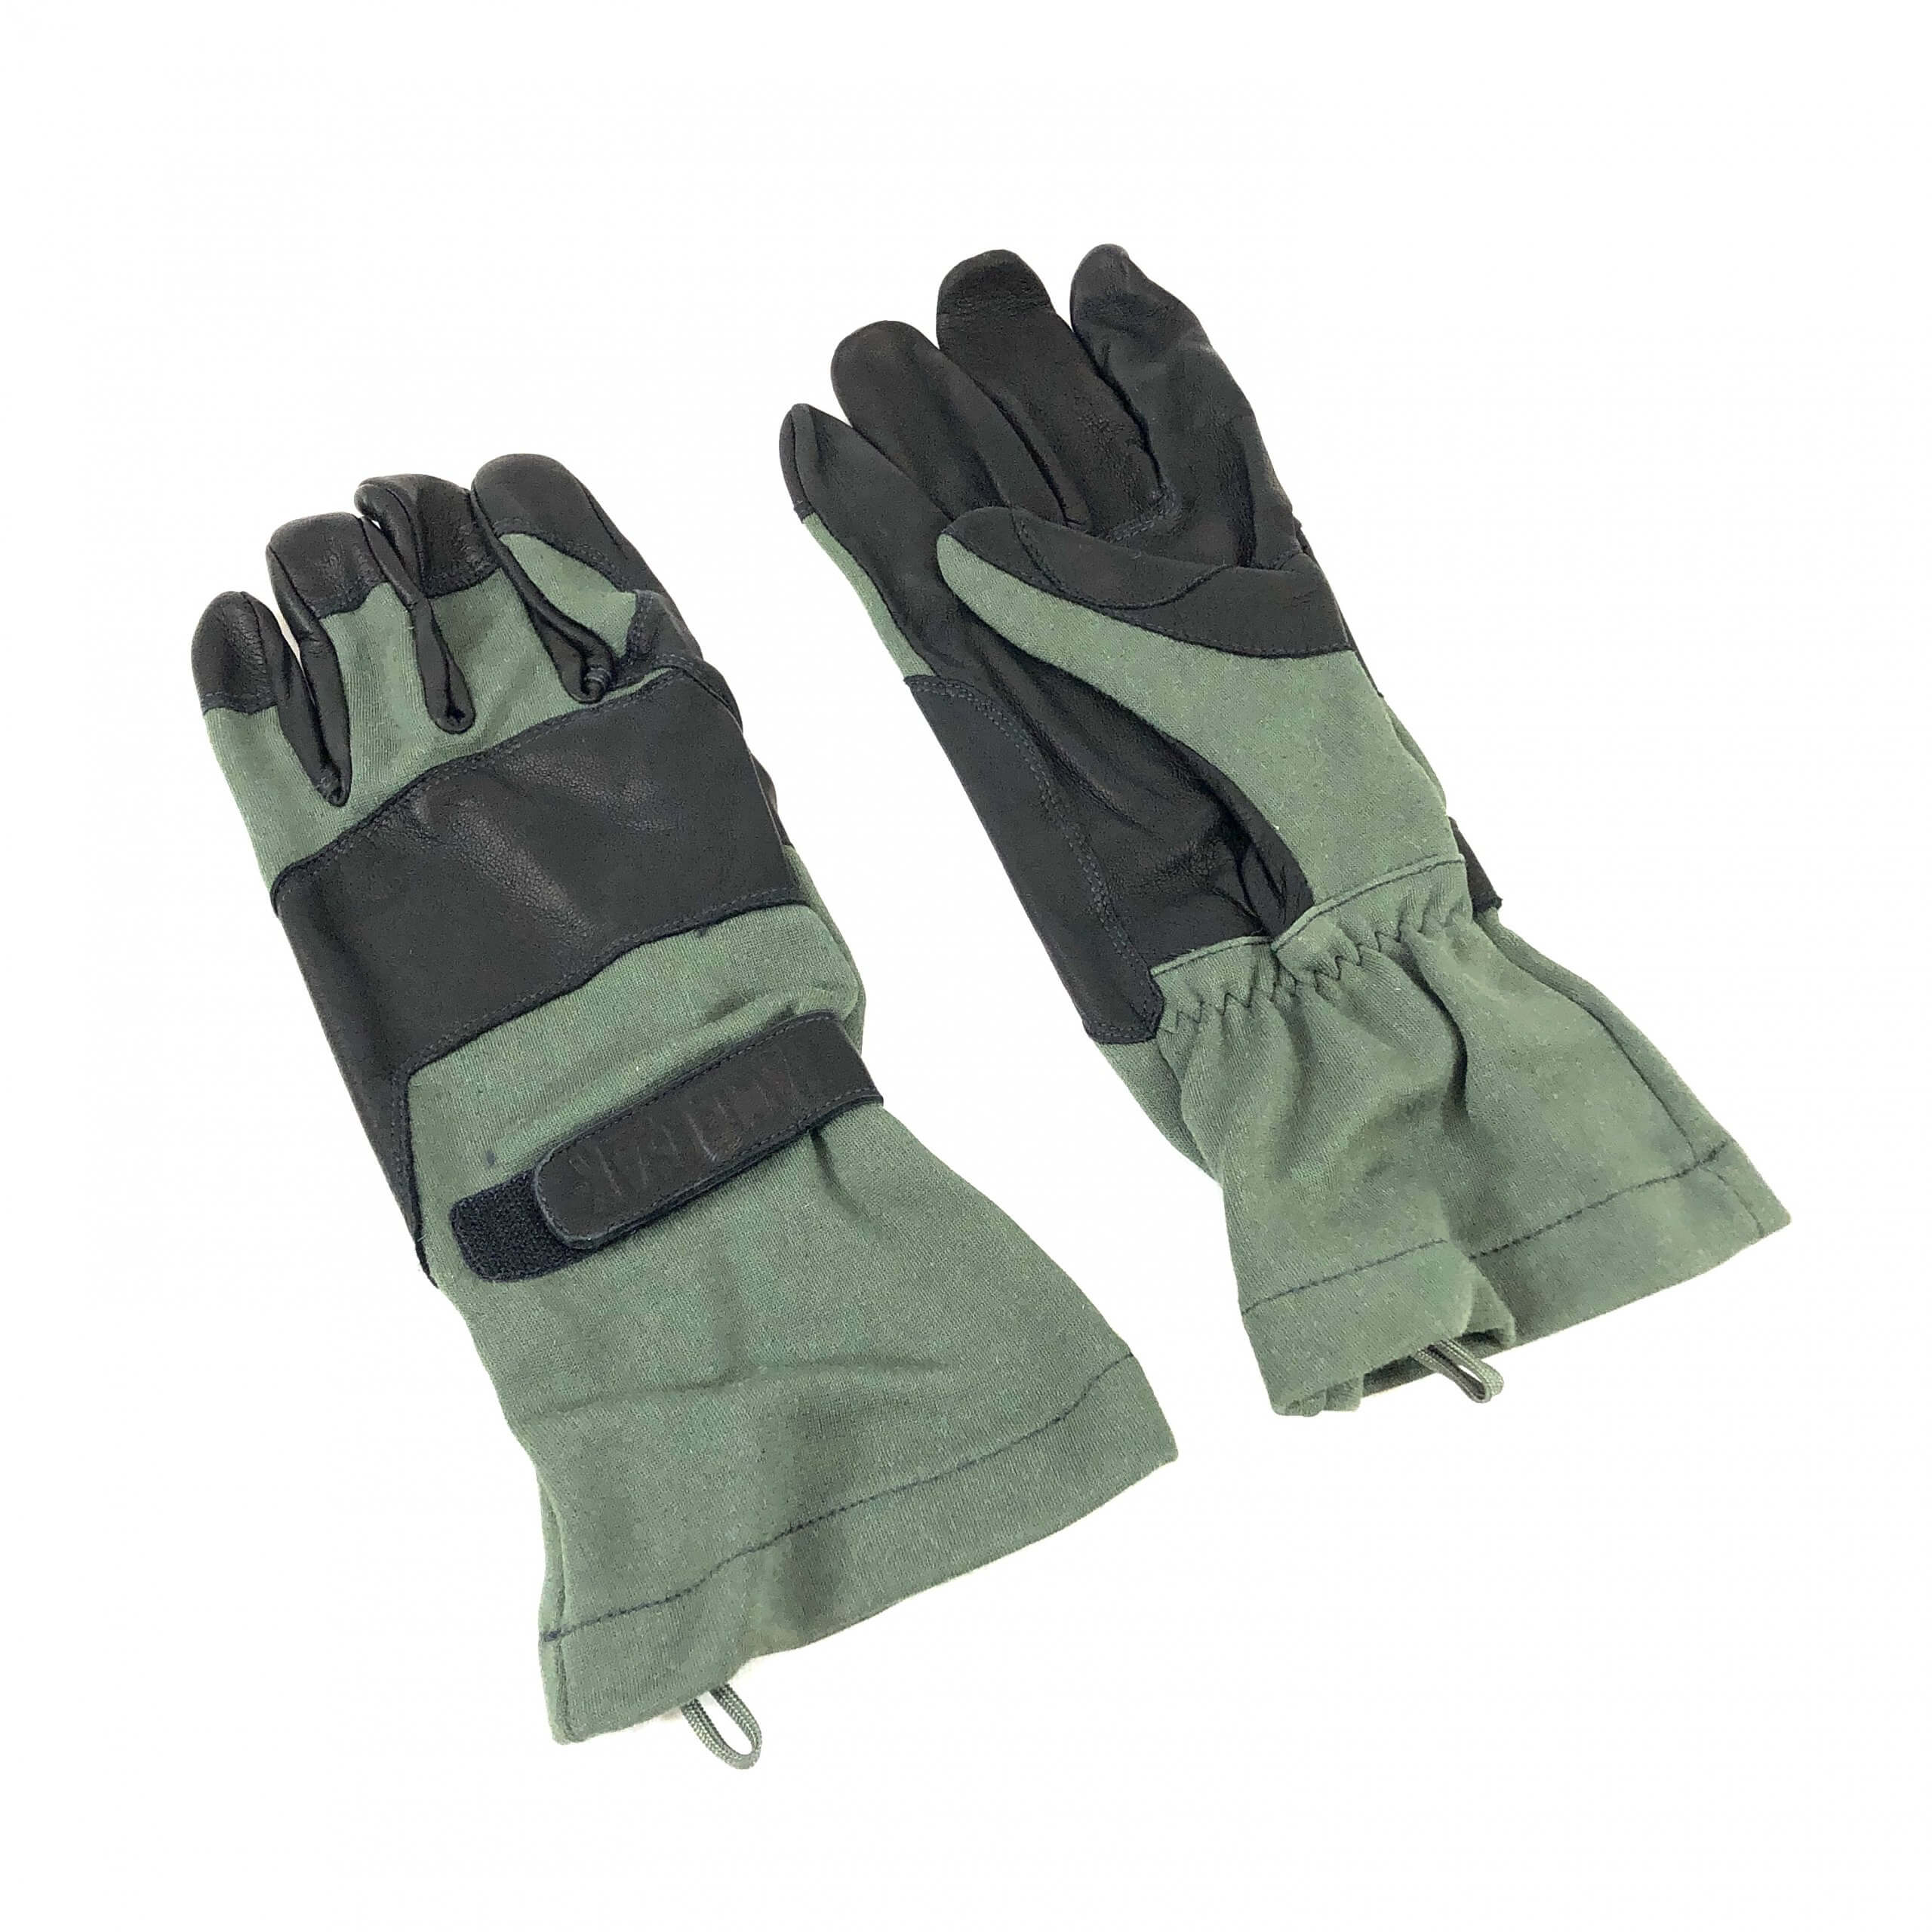 Buy GI Nomex Kev-lar Max Grip NT DFAR Gloves at Army Surplus World